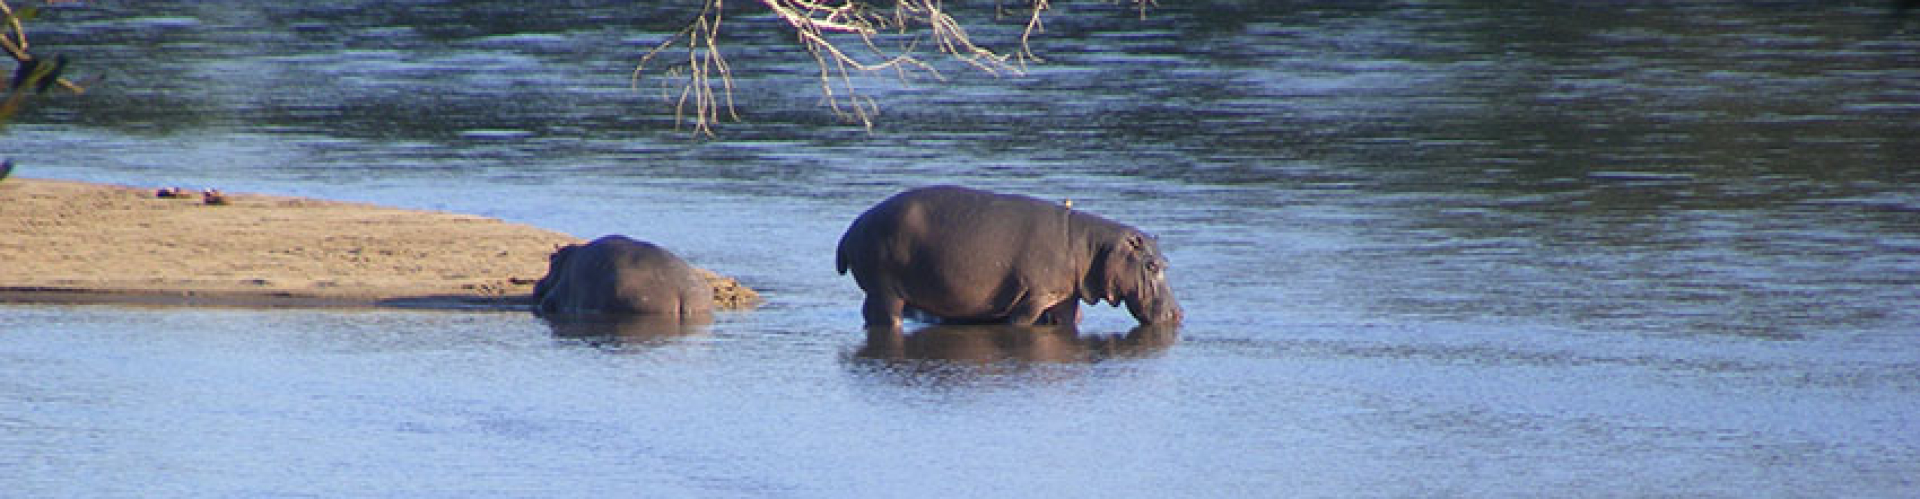 klaseire-game-reserve-zuid-afrika-safari-nijlpaarden